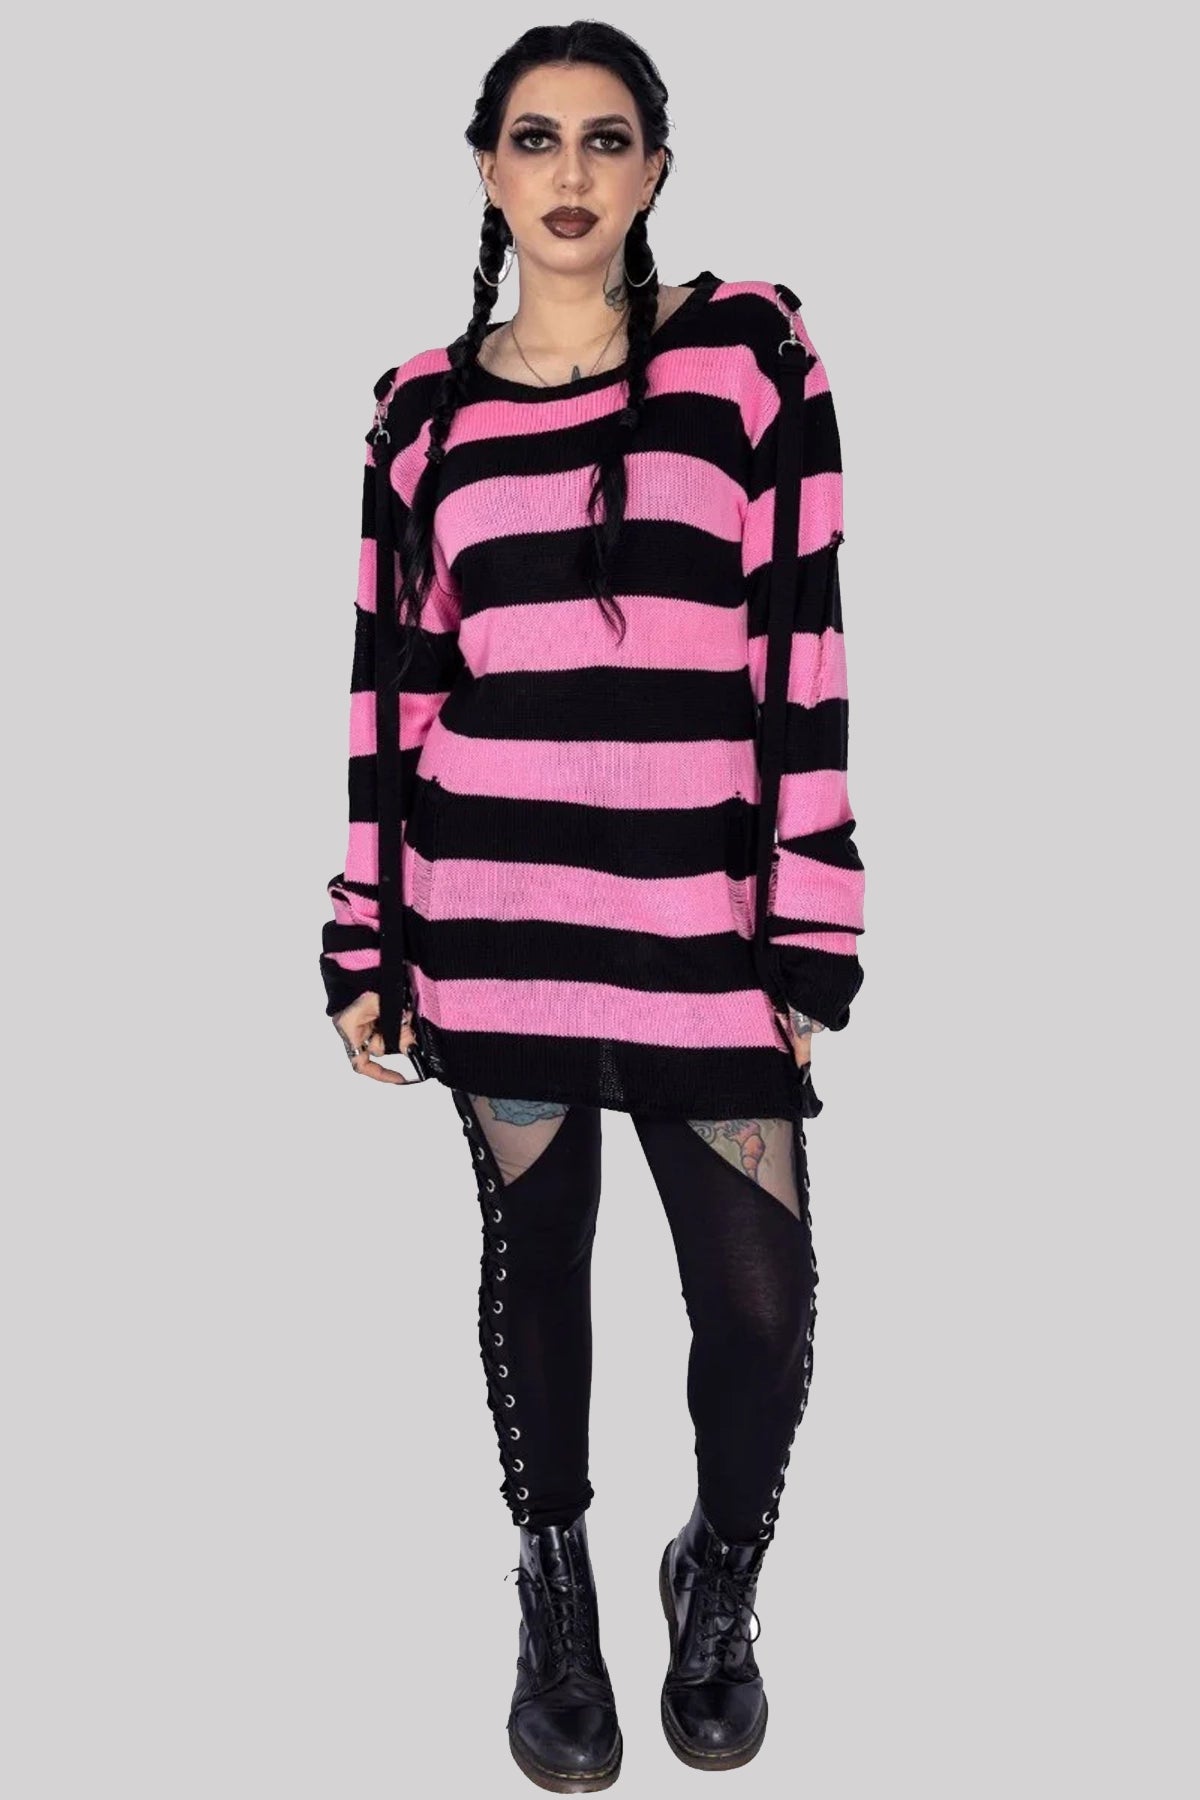 Heartless Oriana Wide Stripe Harness Grunge Jumper, Pink